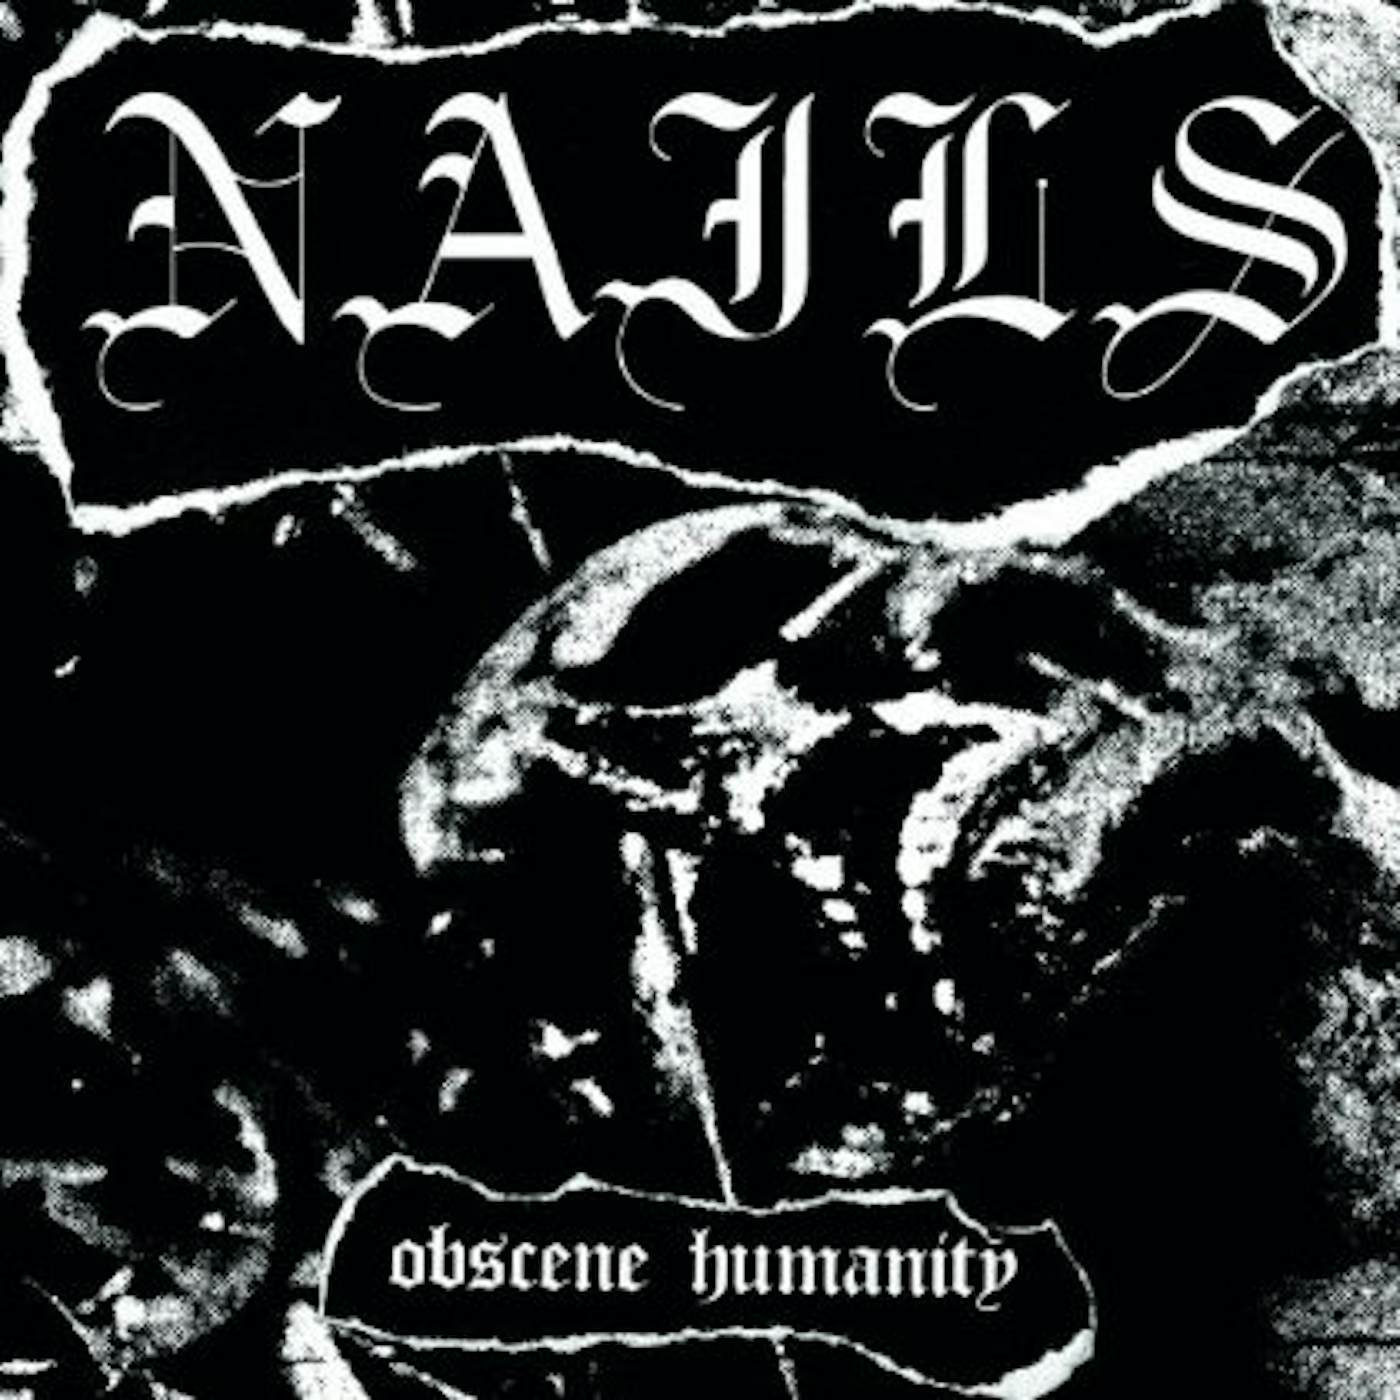 Nails Obscene Humanity Vinyl Record